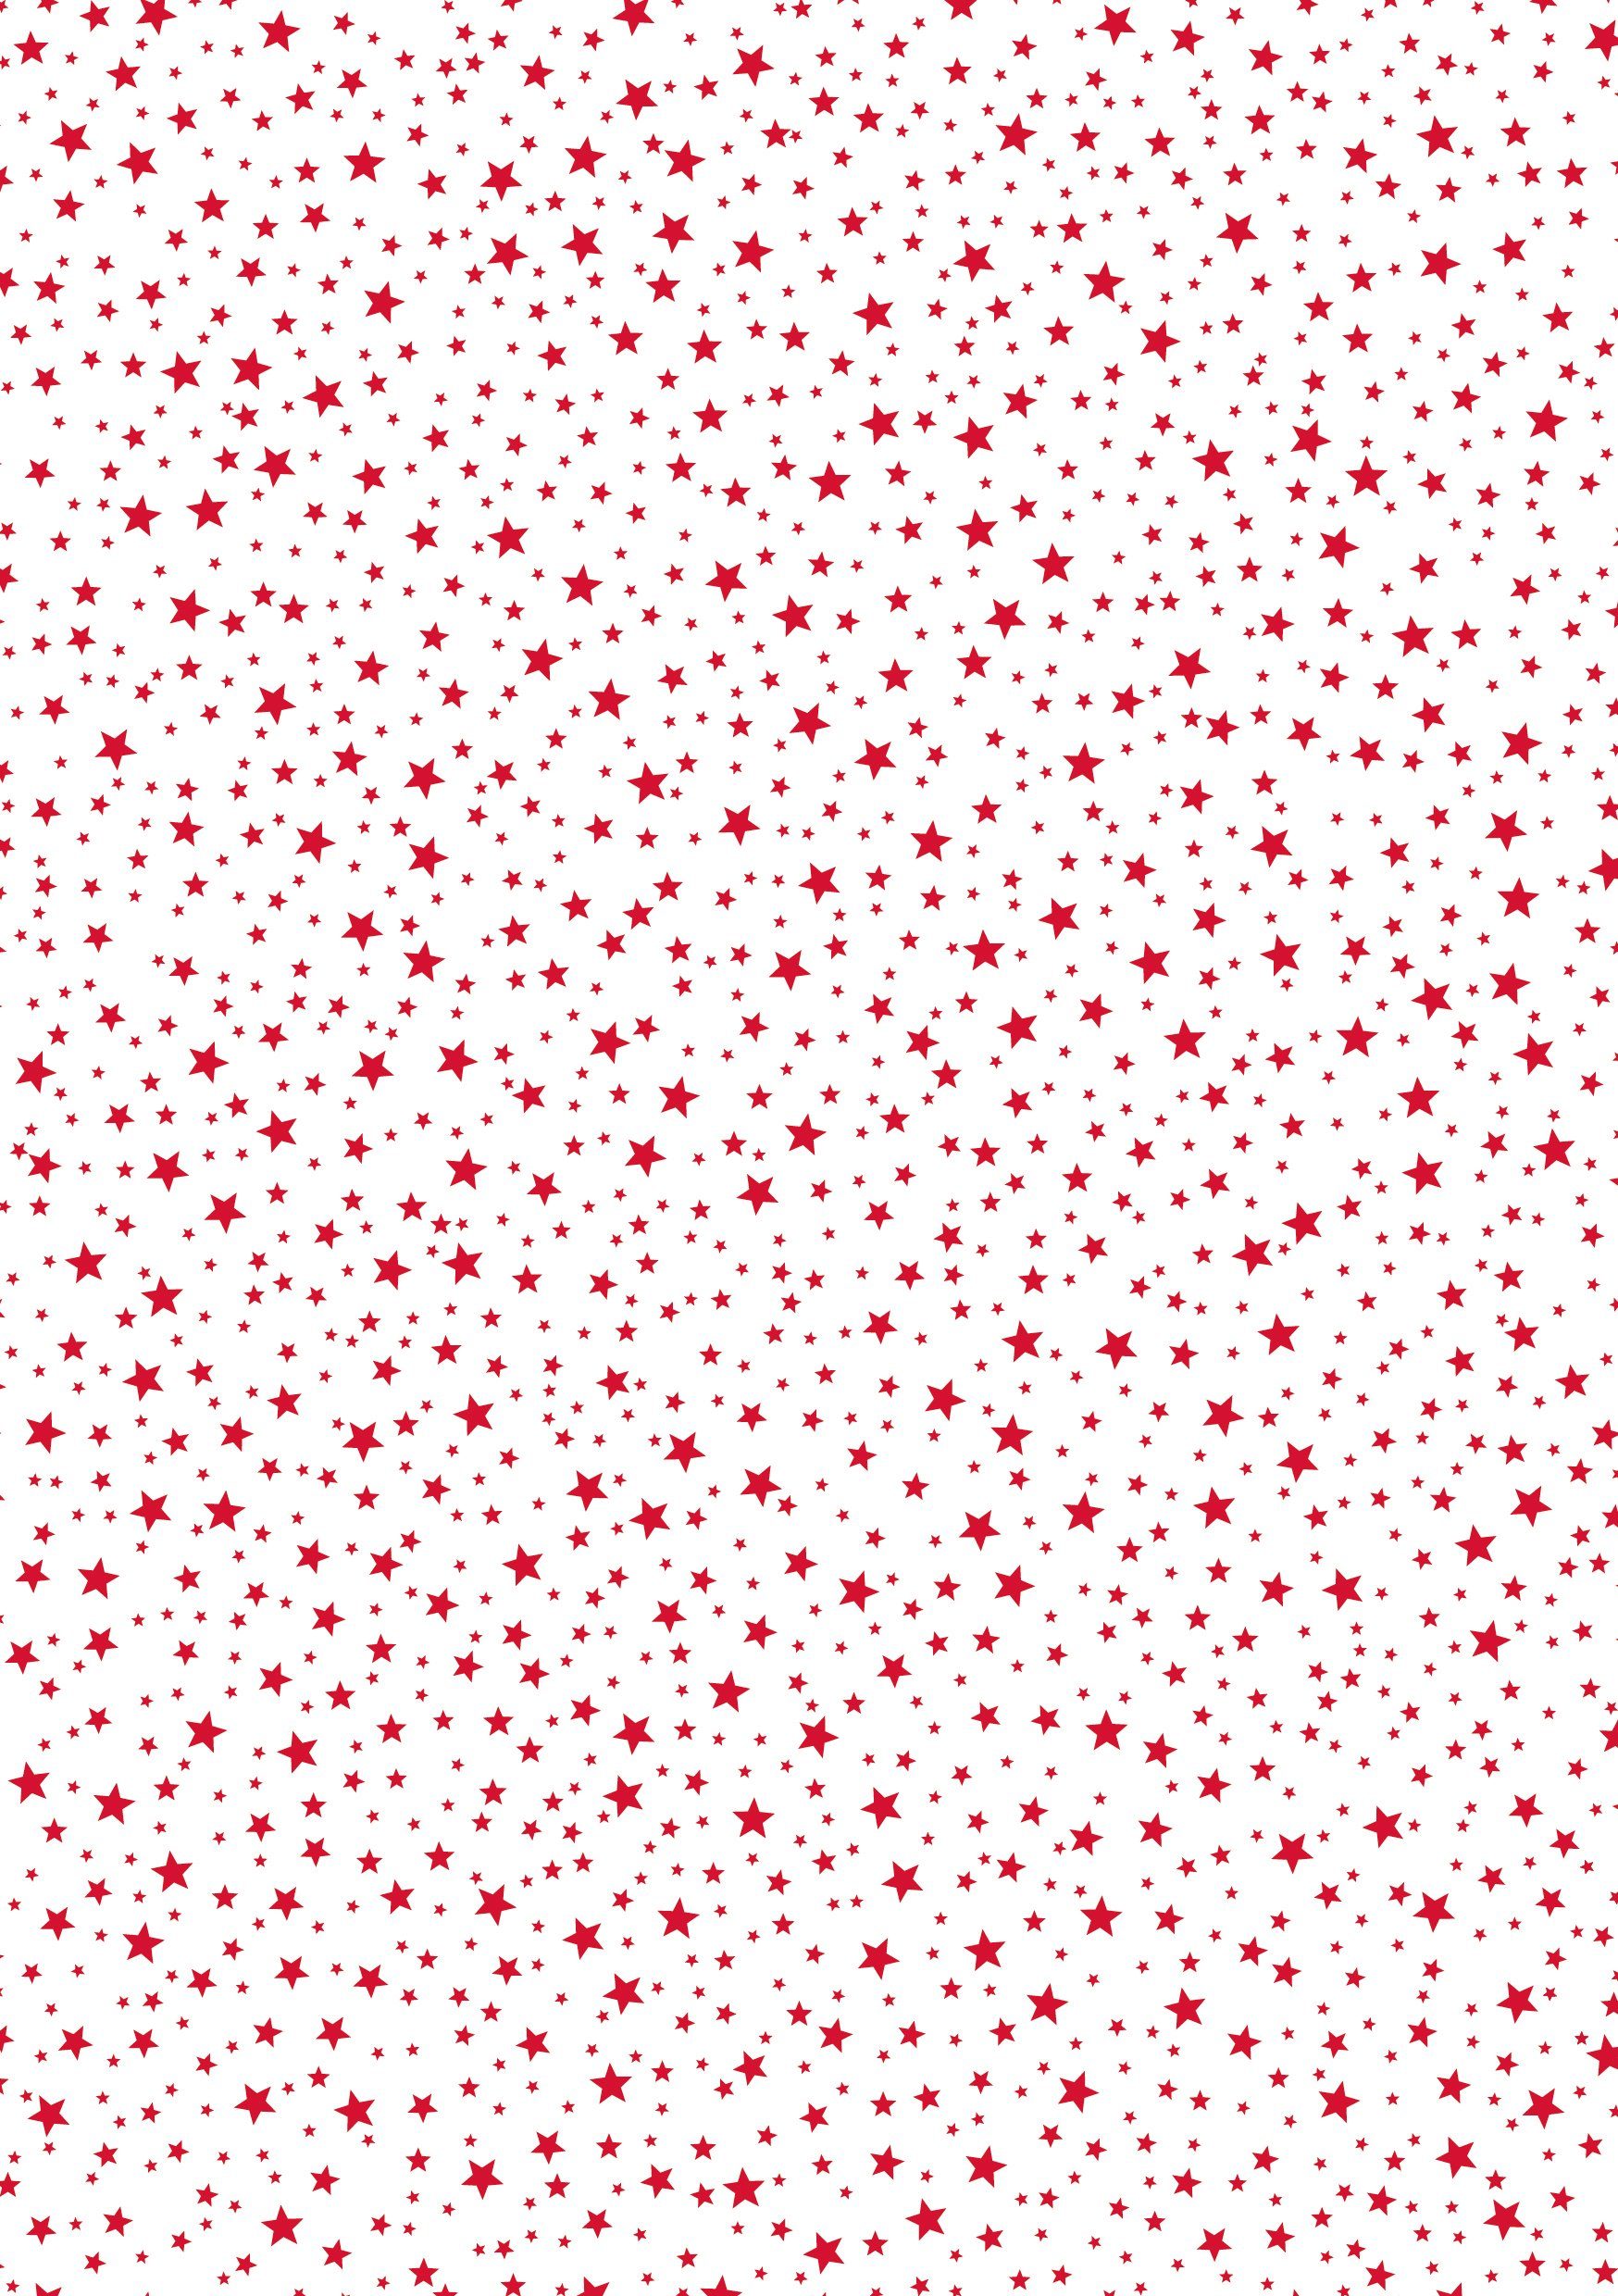 MarpaJansen Motivpapier Mini-Sterne, 70 cm x 50 cm Rot